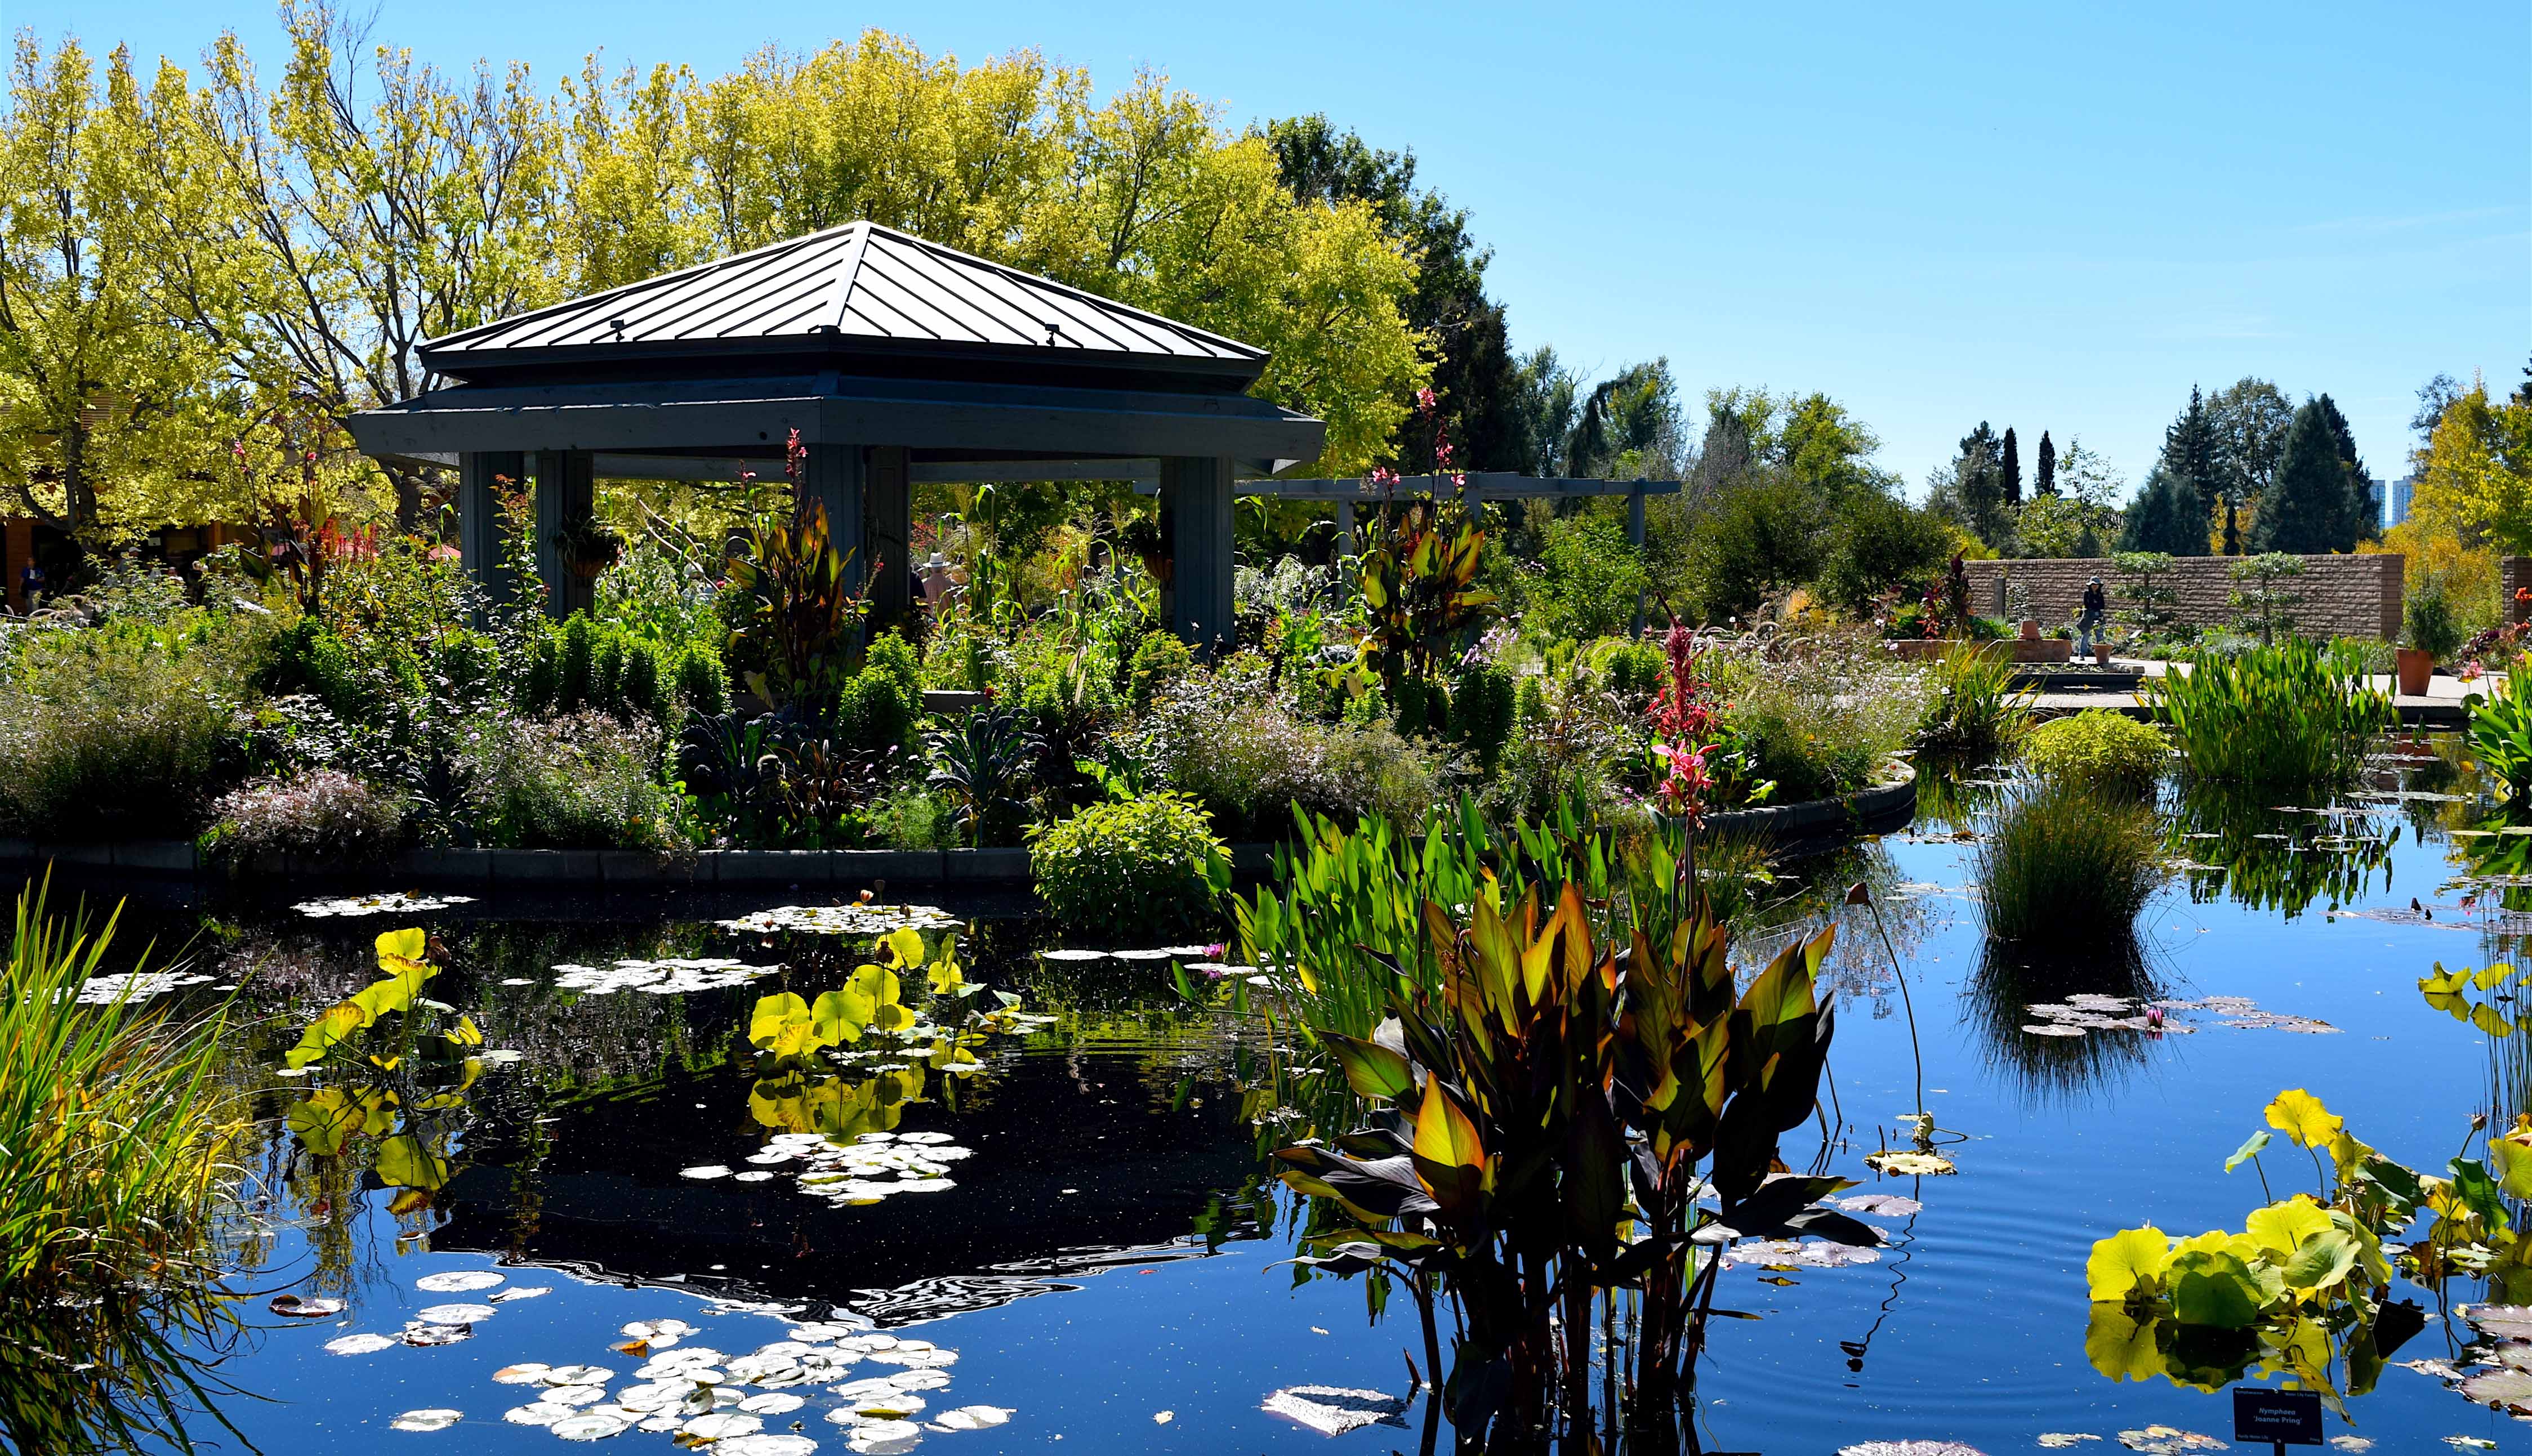 The Denver Botanic Gardens.